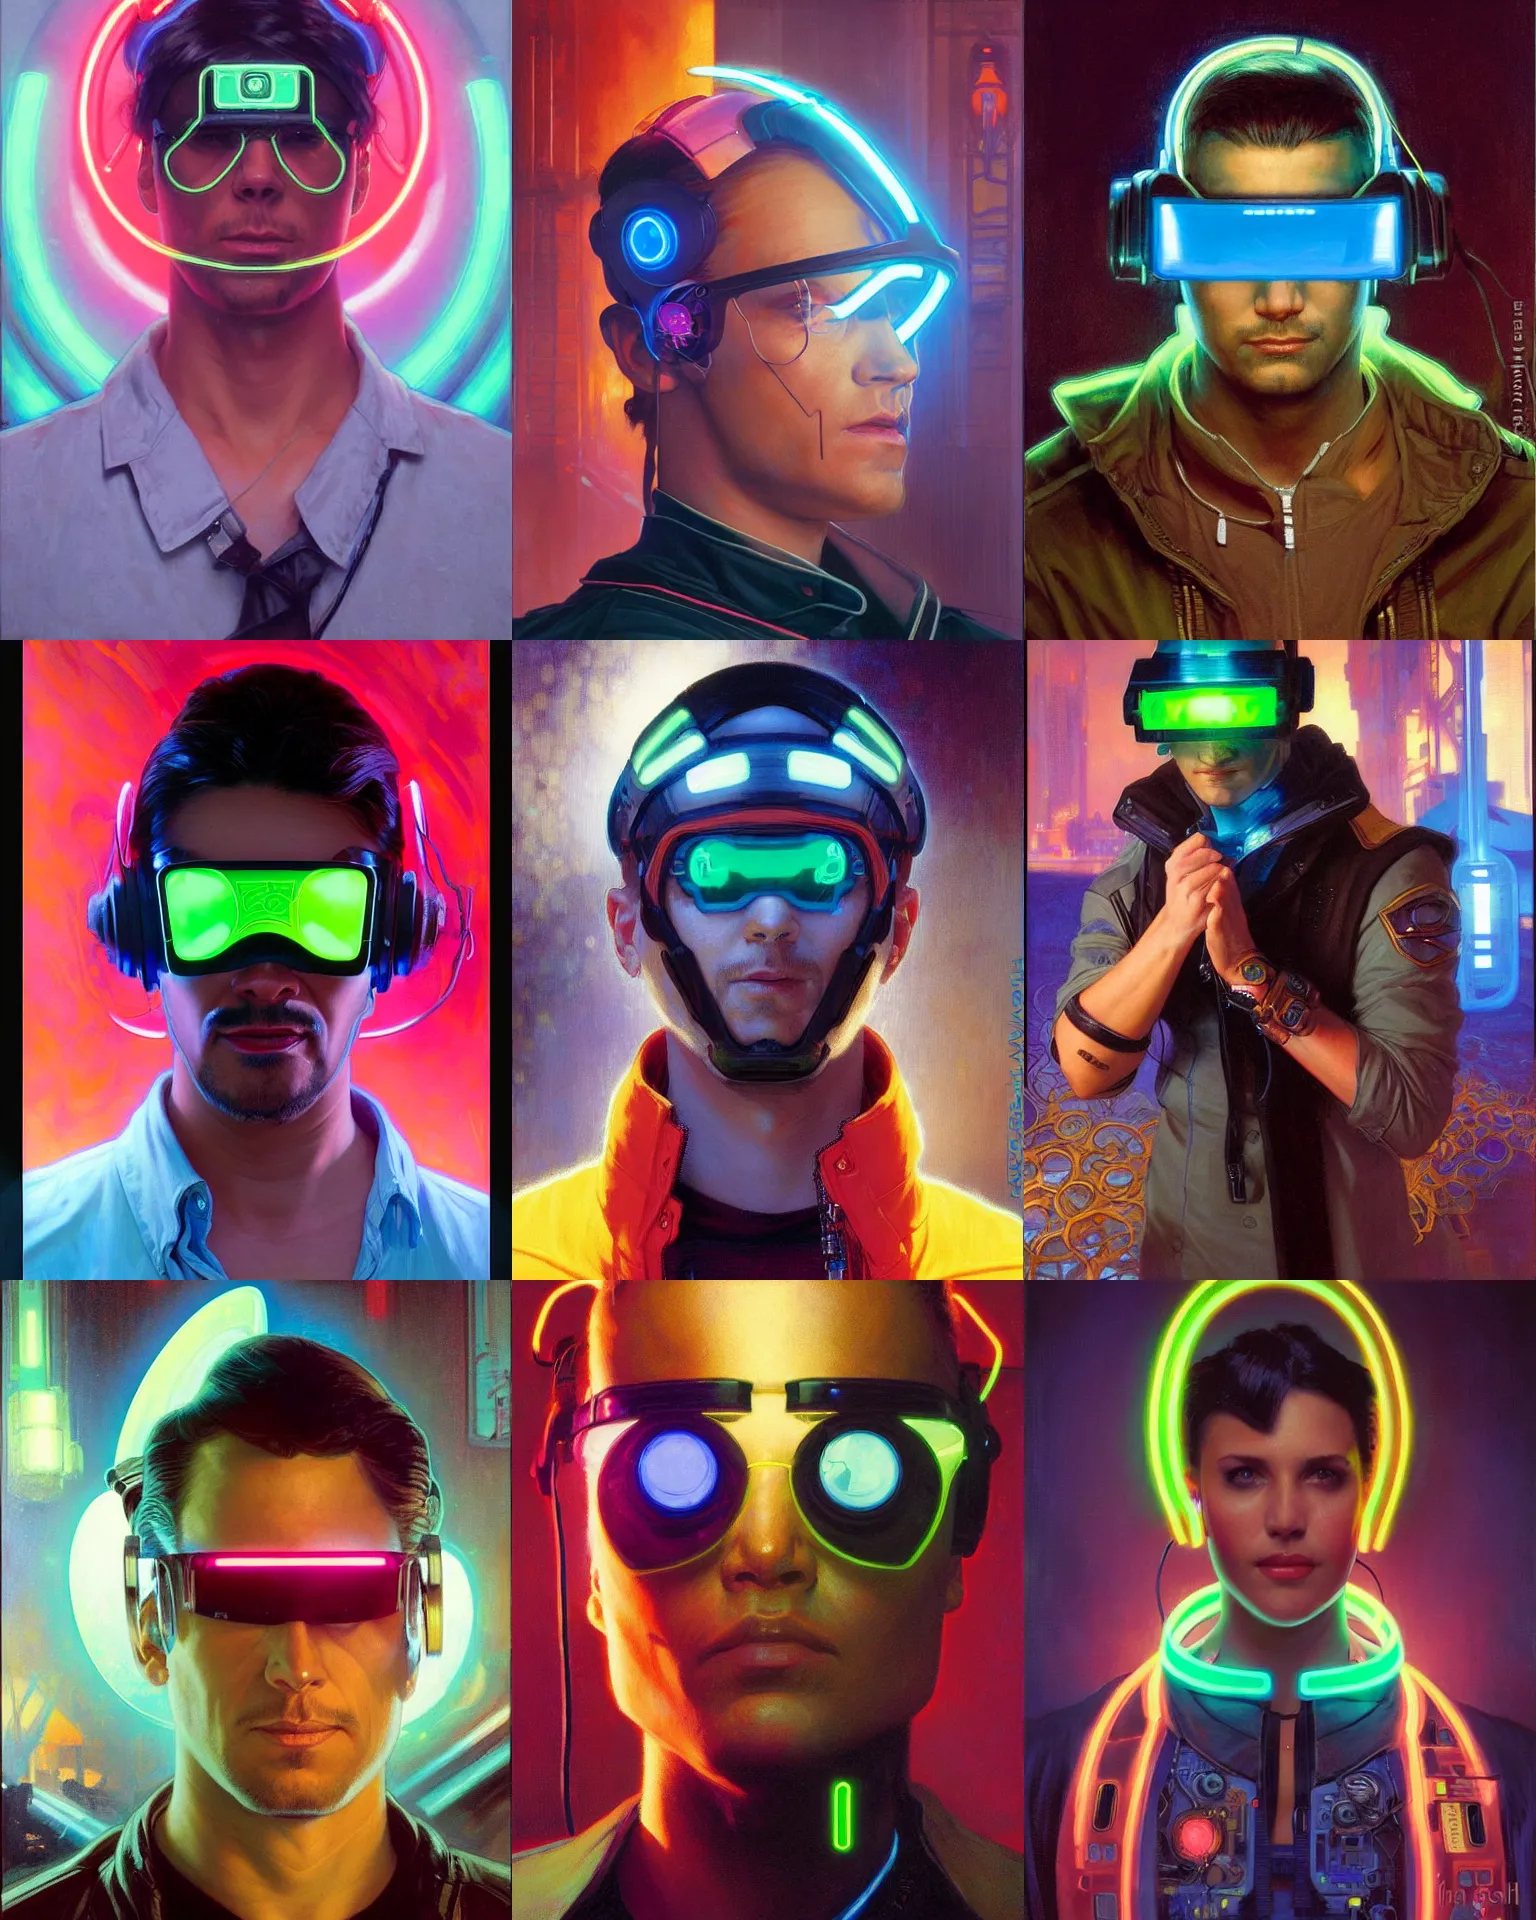 Prompt: neon cyberpunk hacker with glowing geordi visor over eyes and headset headshot portrait painting by donato giancola, rhads, loish, alphonse mucha, mead schaeffer fashion photography